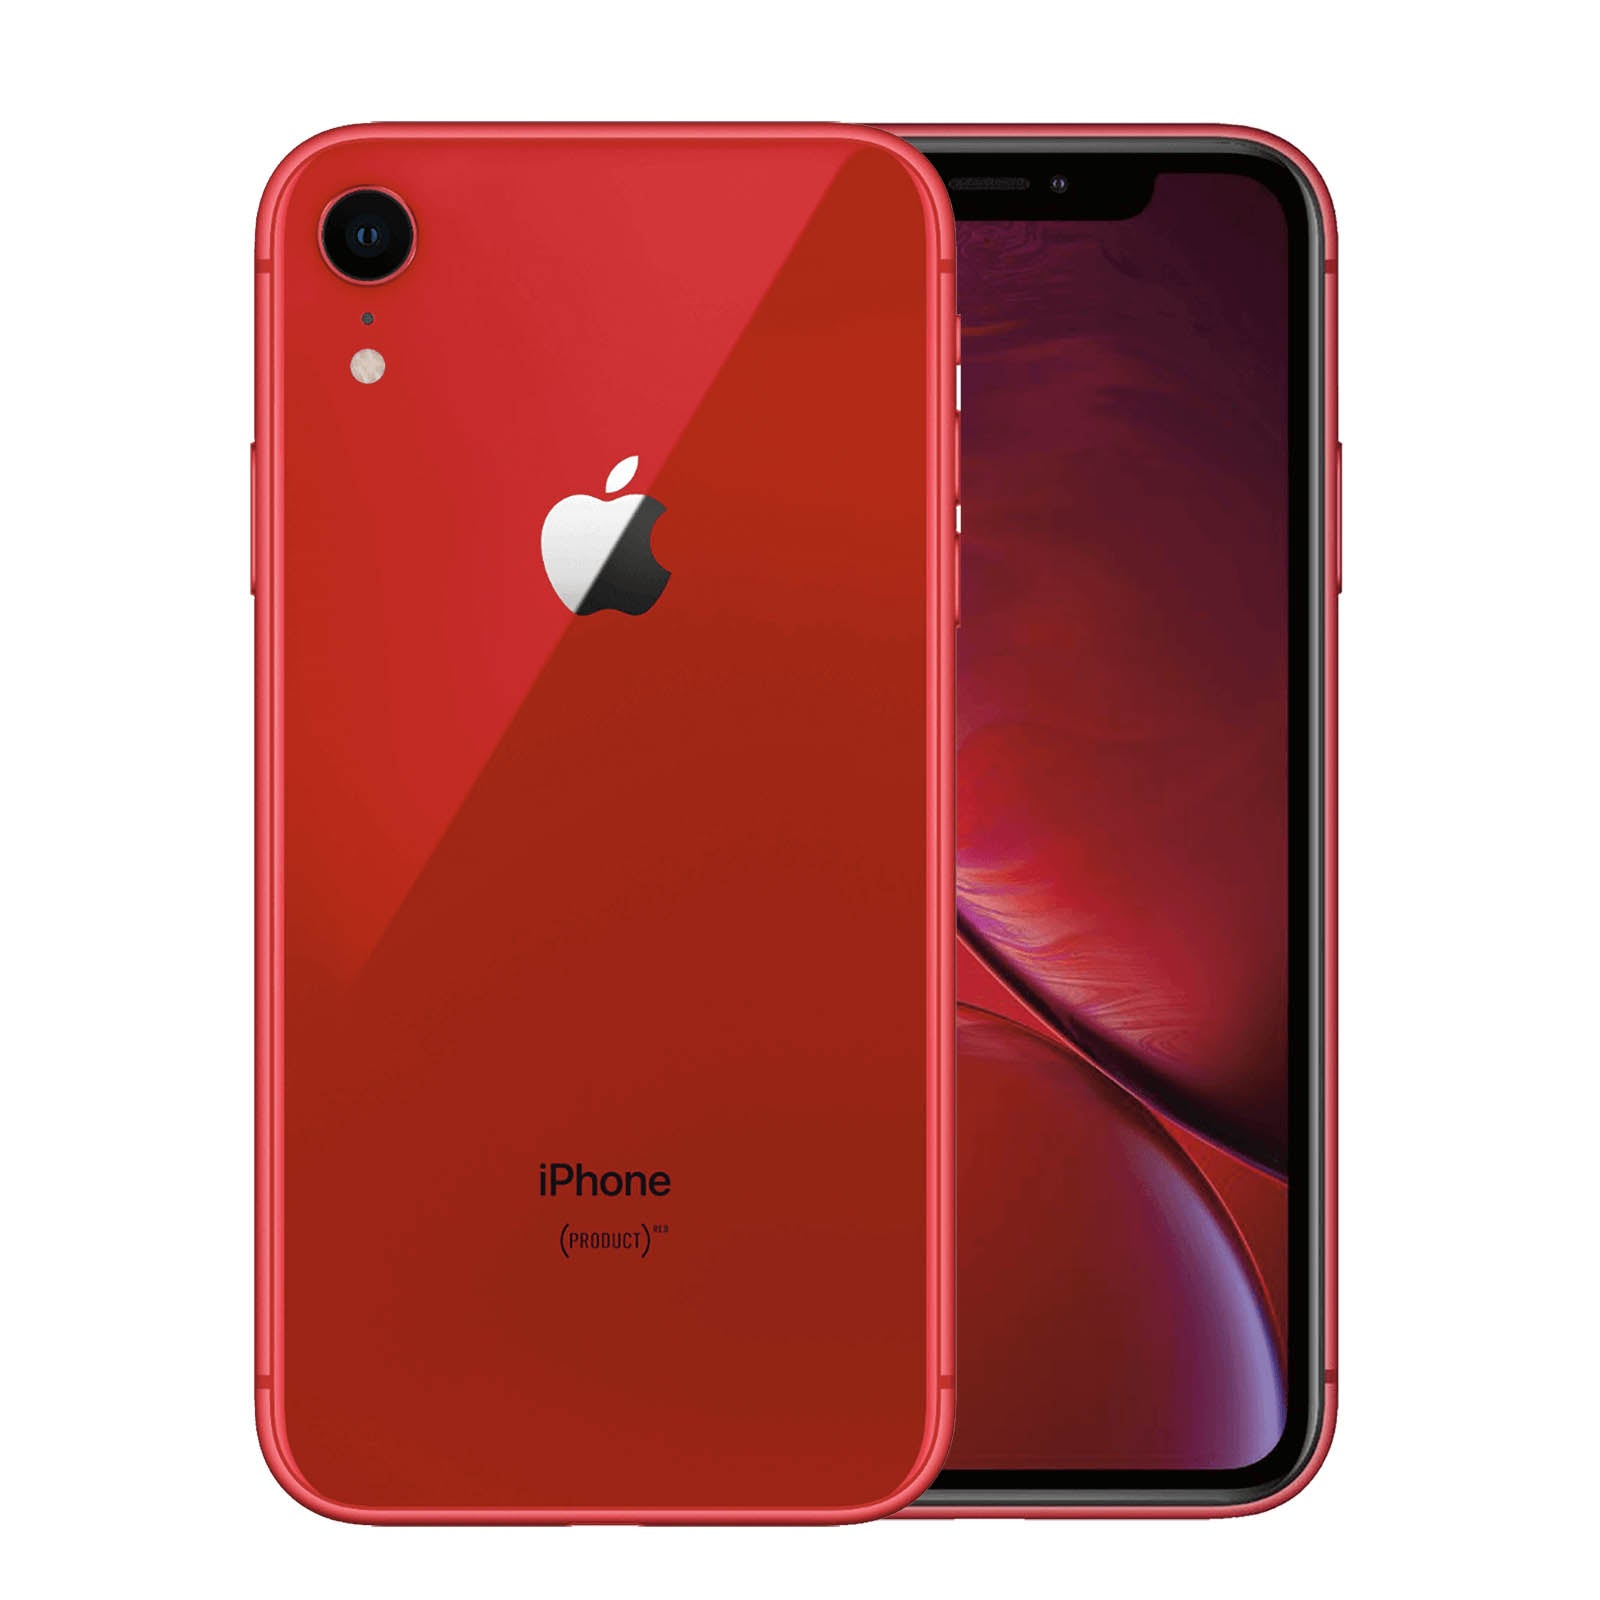 Apple iPhone XR 64GB Product Red Bueno - Desbloqueado